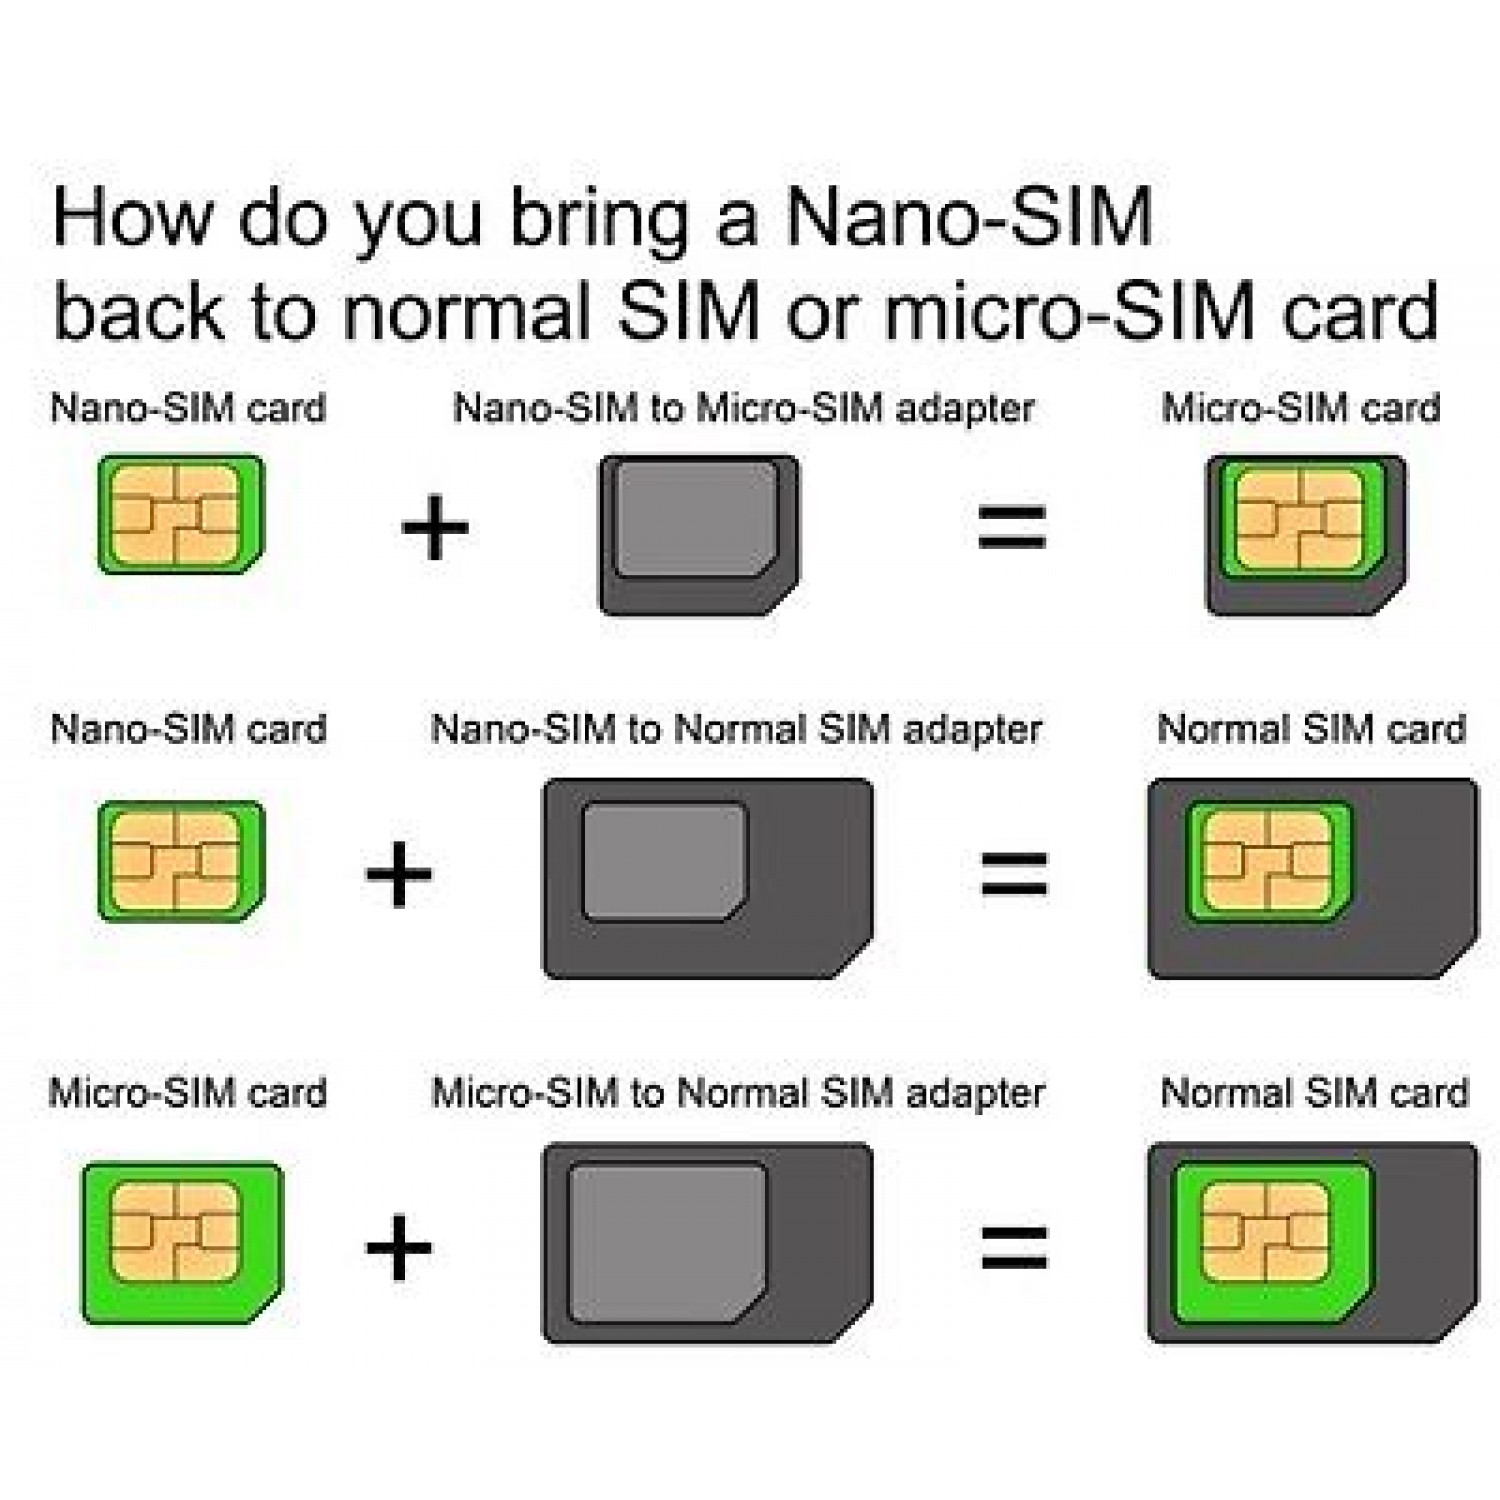 Войти в сим карту телефона. Разъем микро сим карты 7pin. Микро сим карта 3 FF. Формат SIM-карт Nano-SIM. Nano-SIM (12.3X8.8X0.67 мм), Micro-SIM (15х12x0.76 мм).